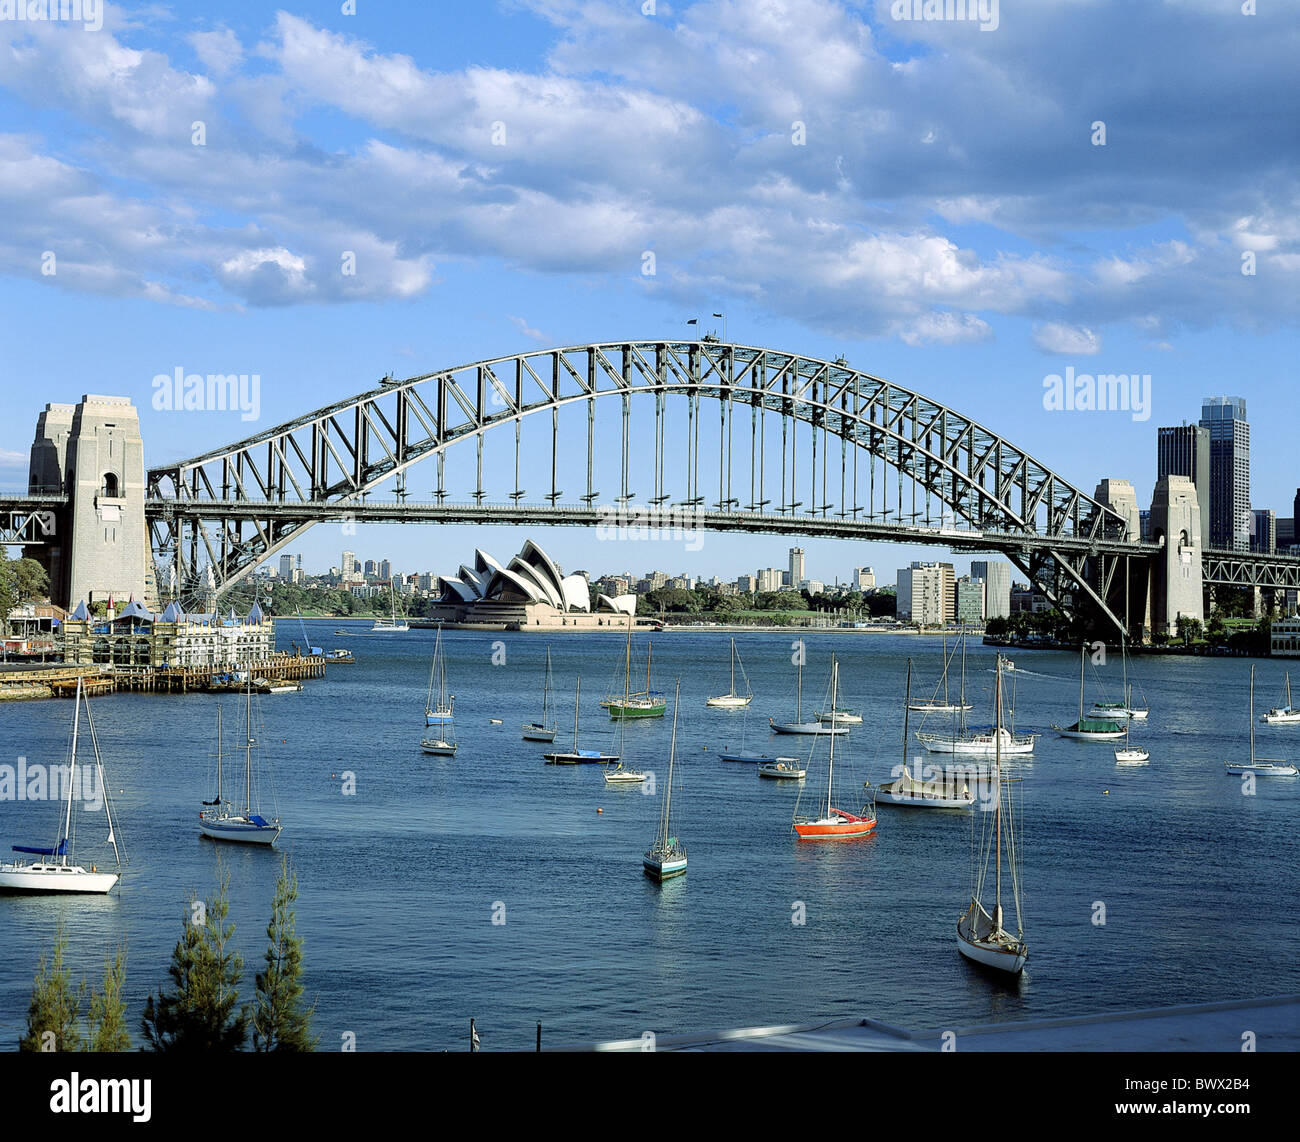 Australia bacino portuale Harbour Bridge opera le navi a vela skyline Sydney Foto Stock